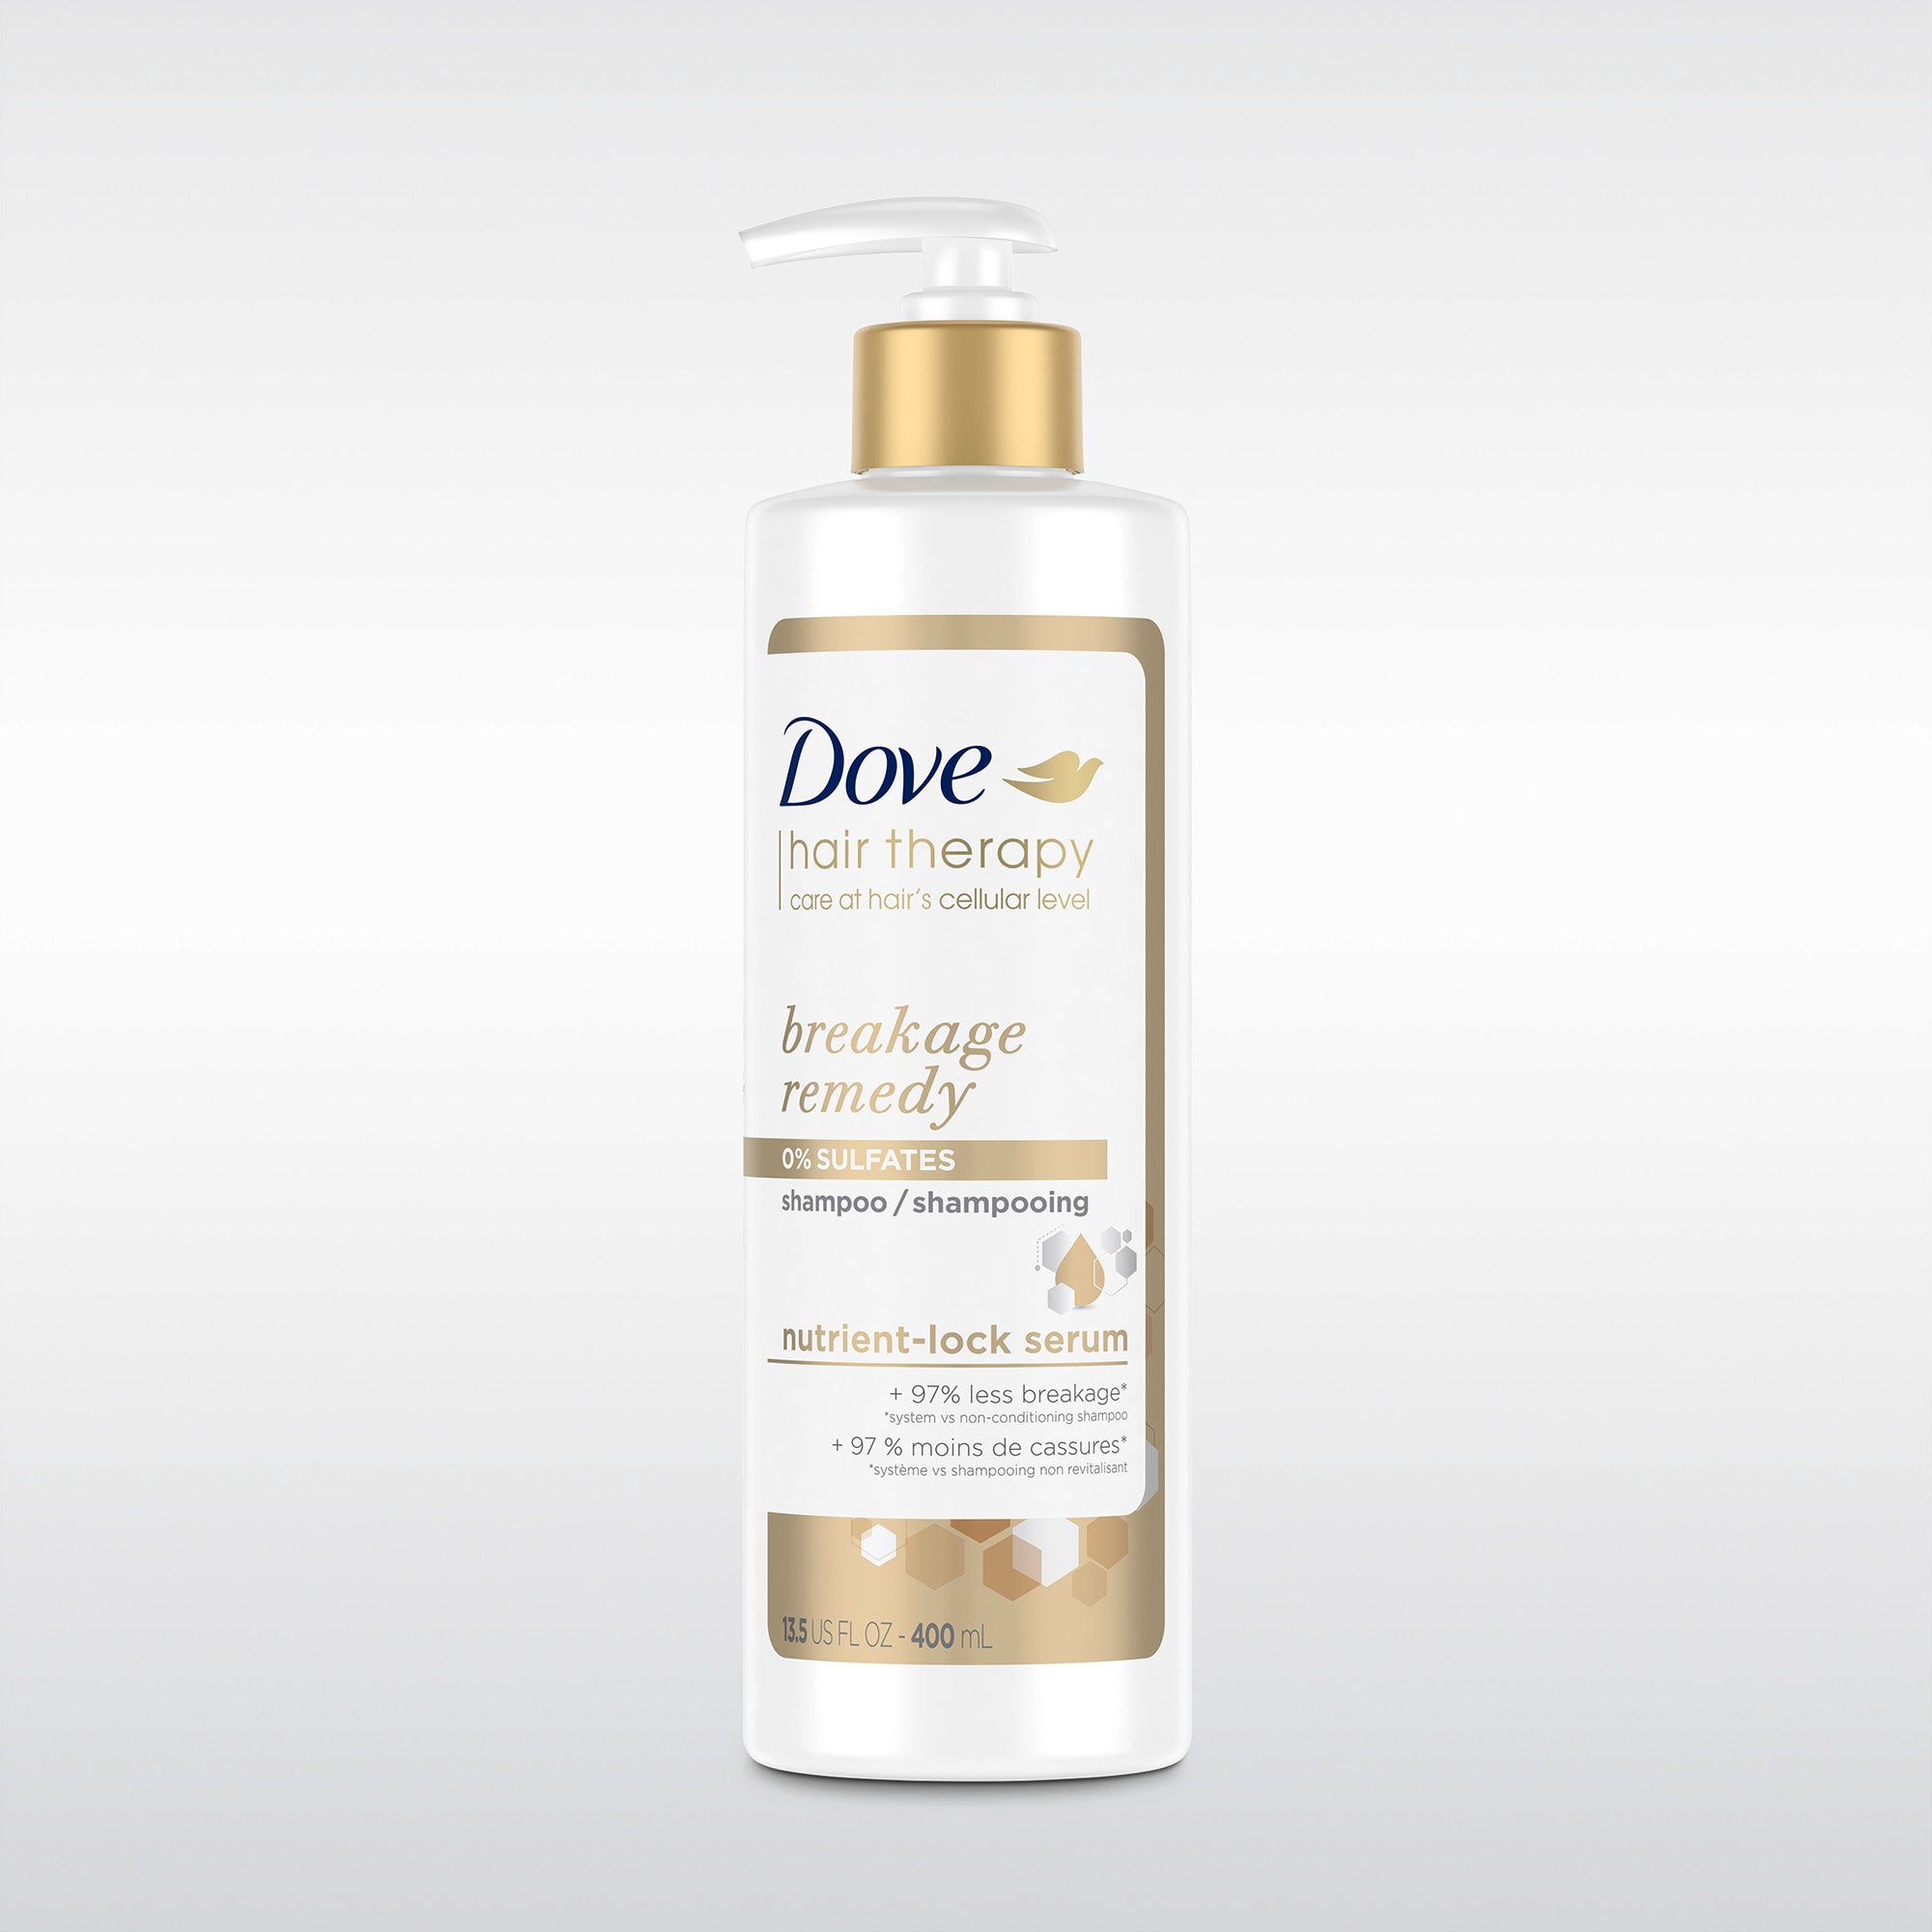 Dove hair therapy breakage remedy shampoo